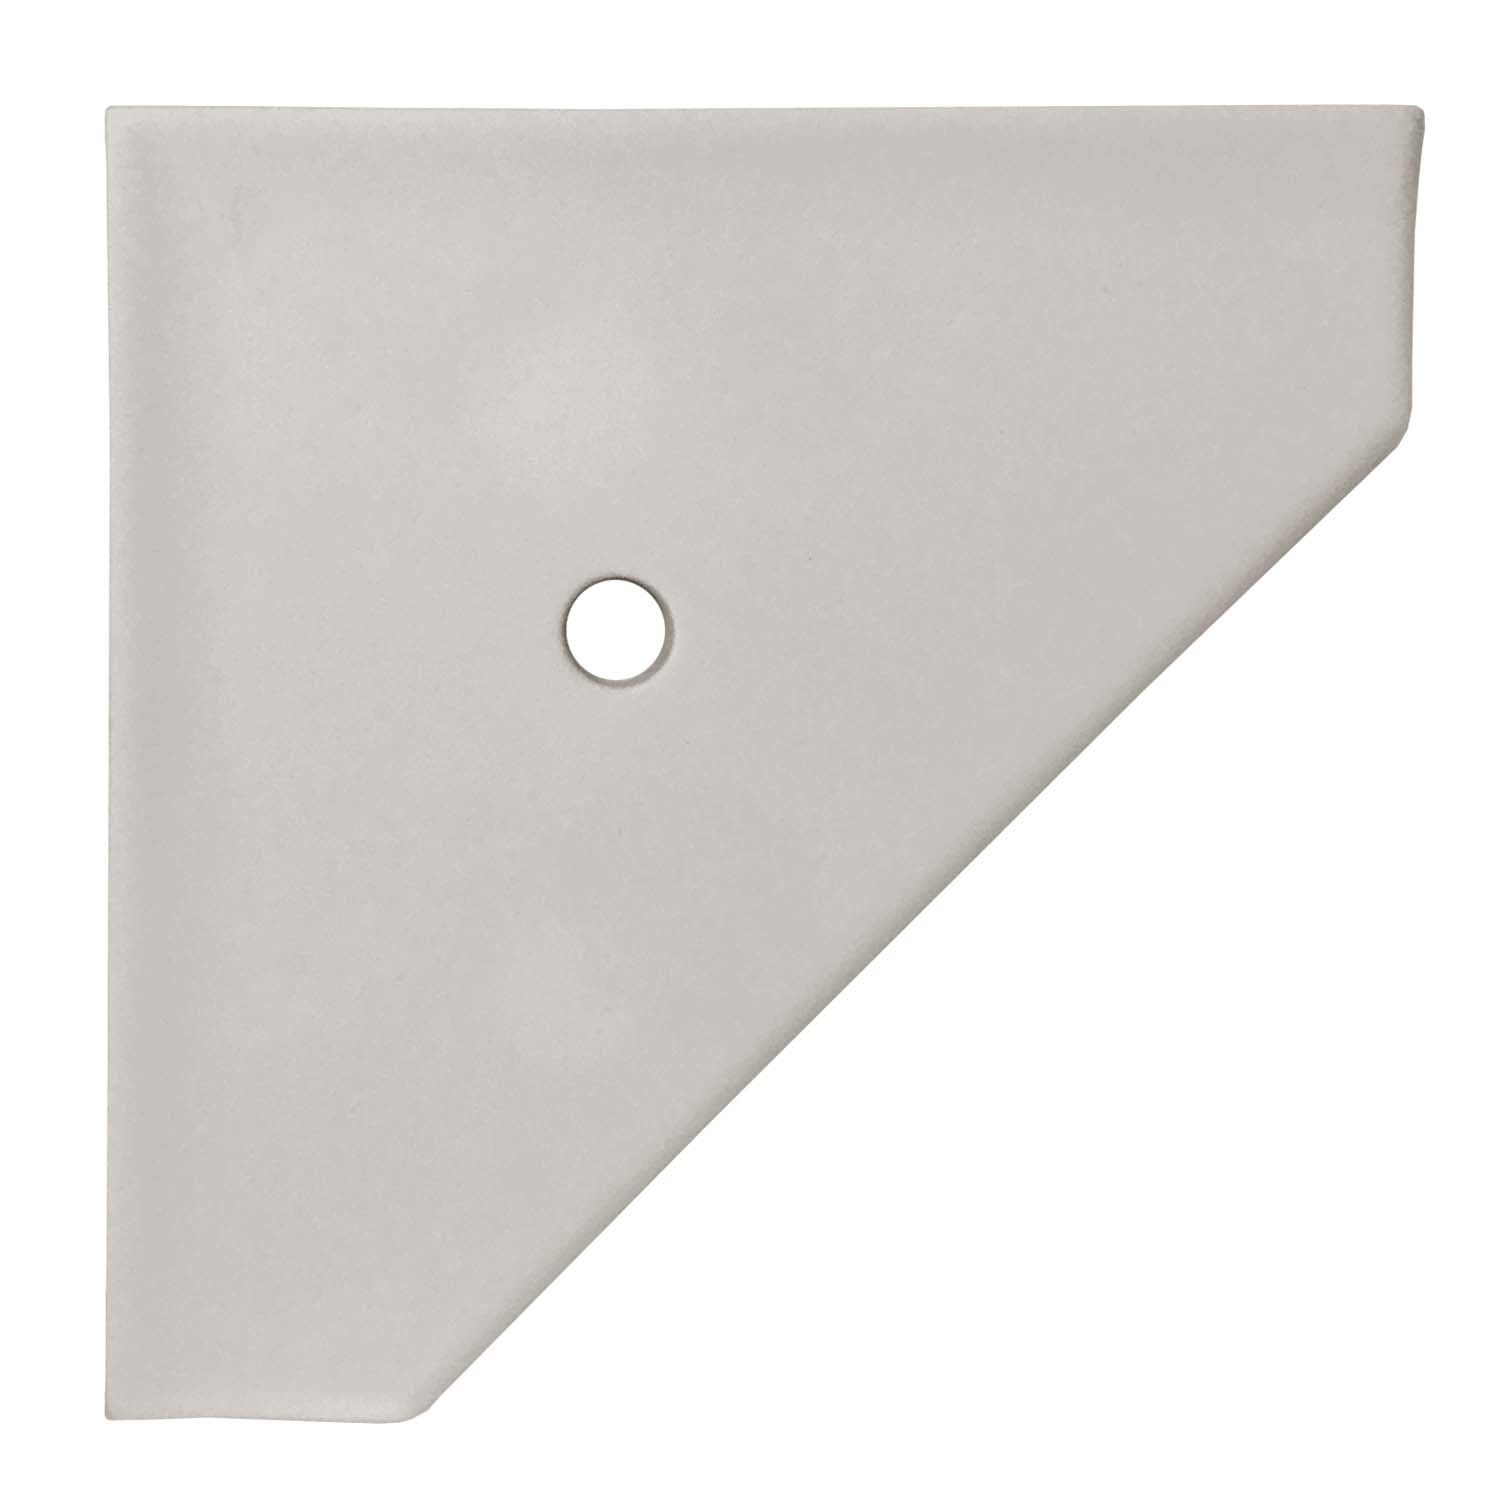 Questech Decor Shower Shelf, 10 inch Geo Flatback, Gray Polished, Size: 10 Corner Shelf